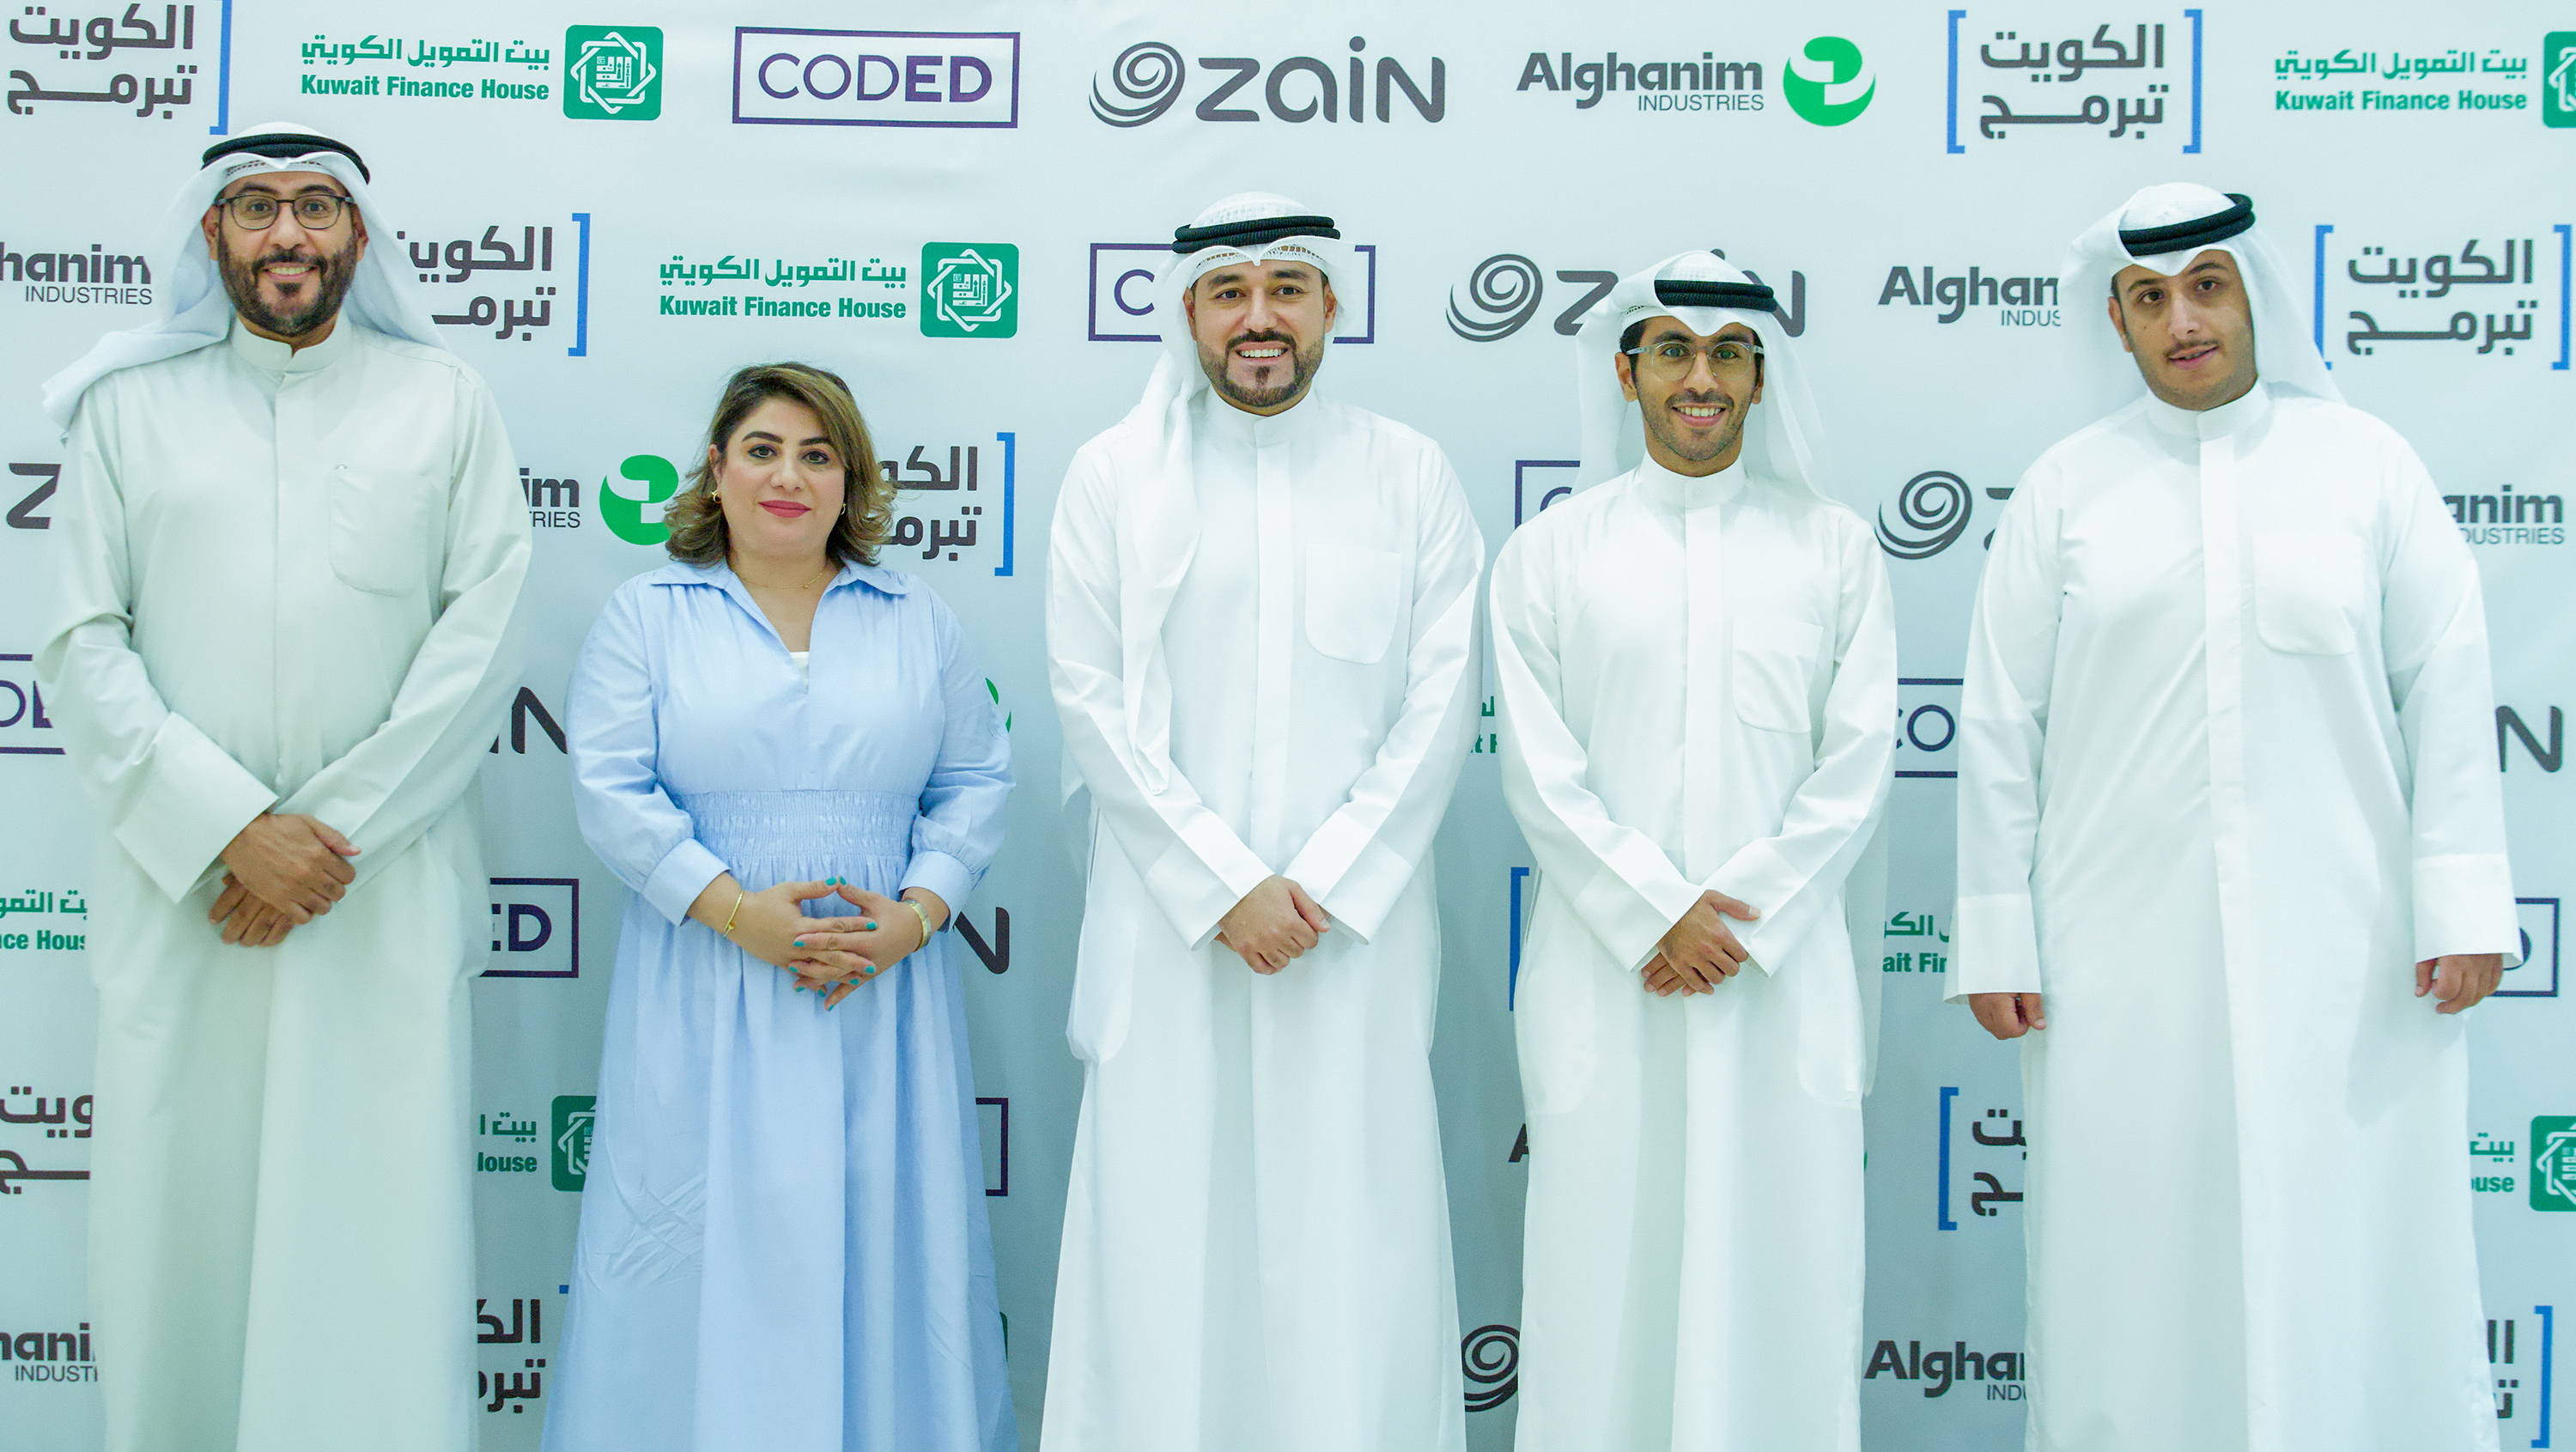 Zain joins in celebrating ‘Kuwait Codes’ graduates